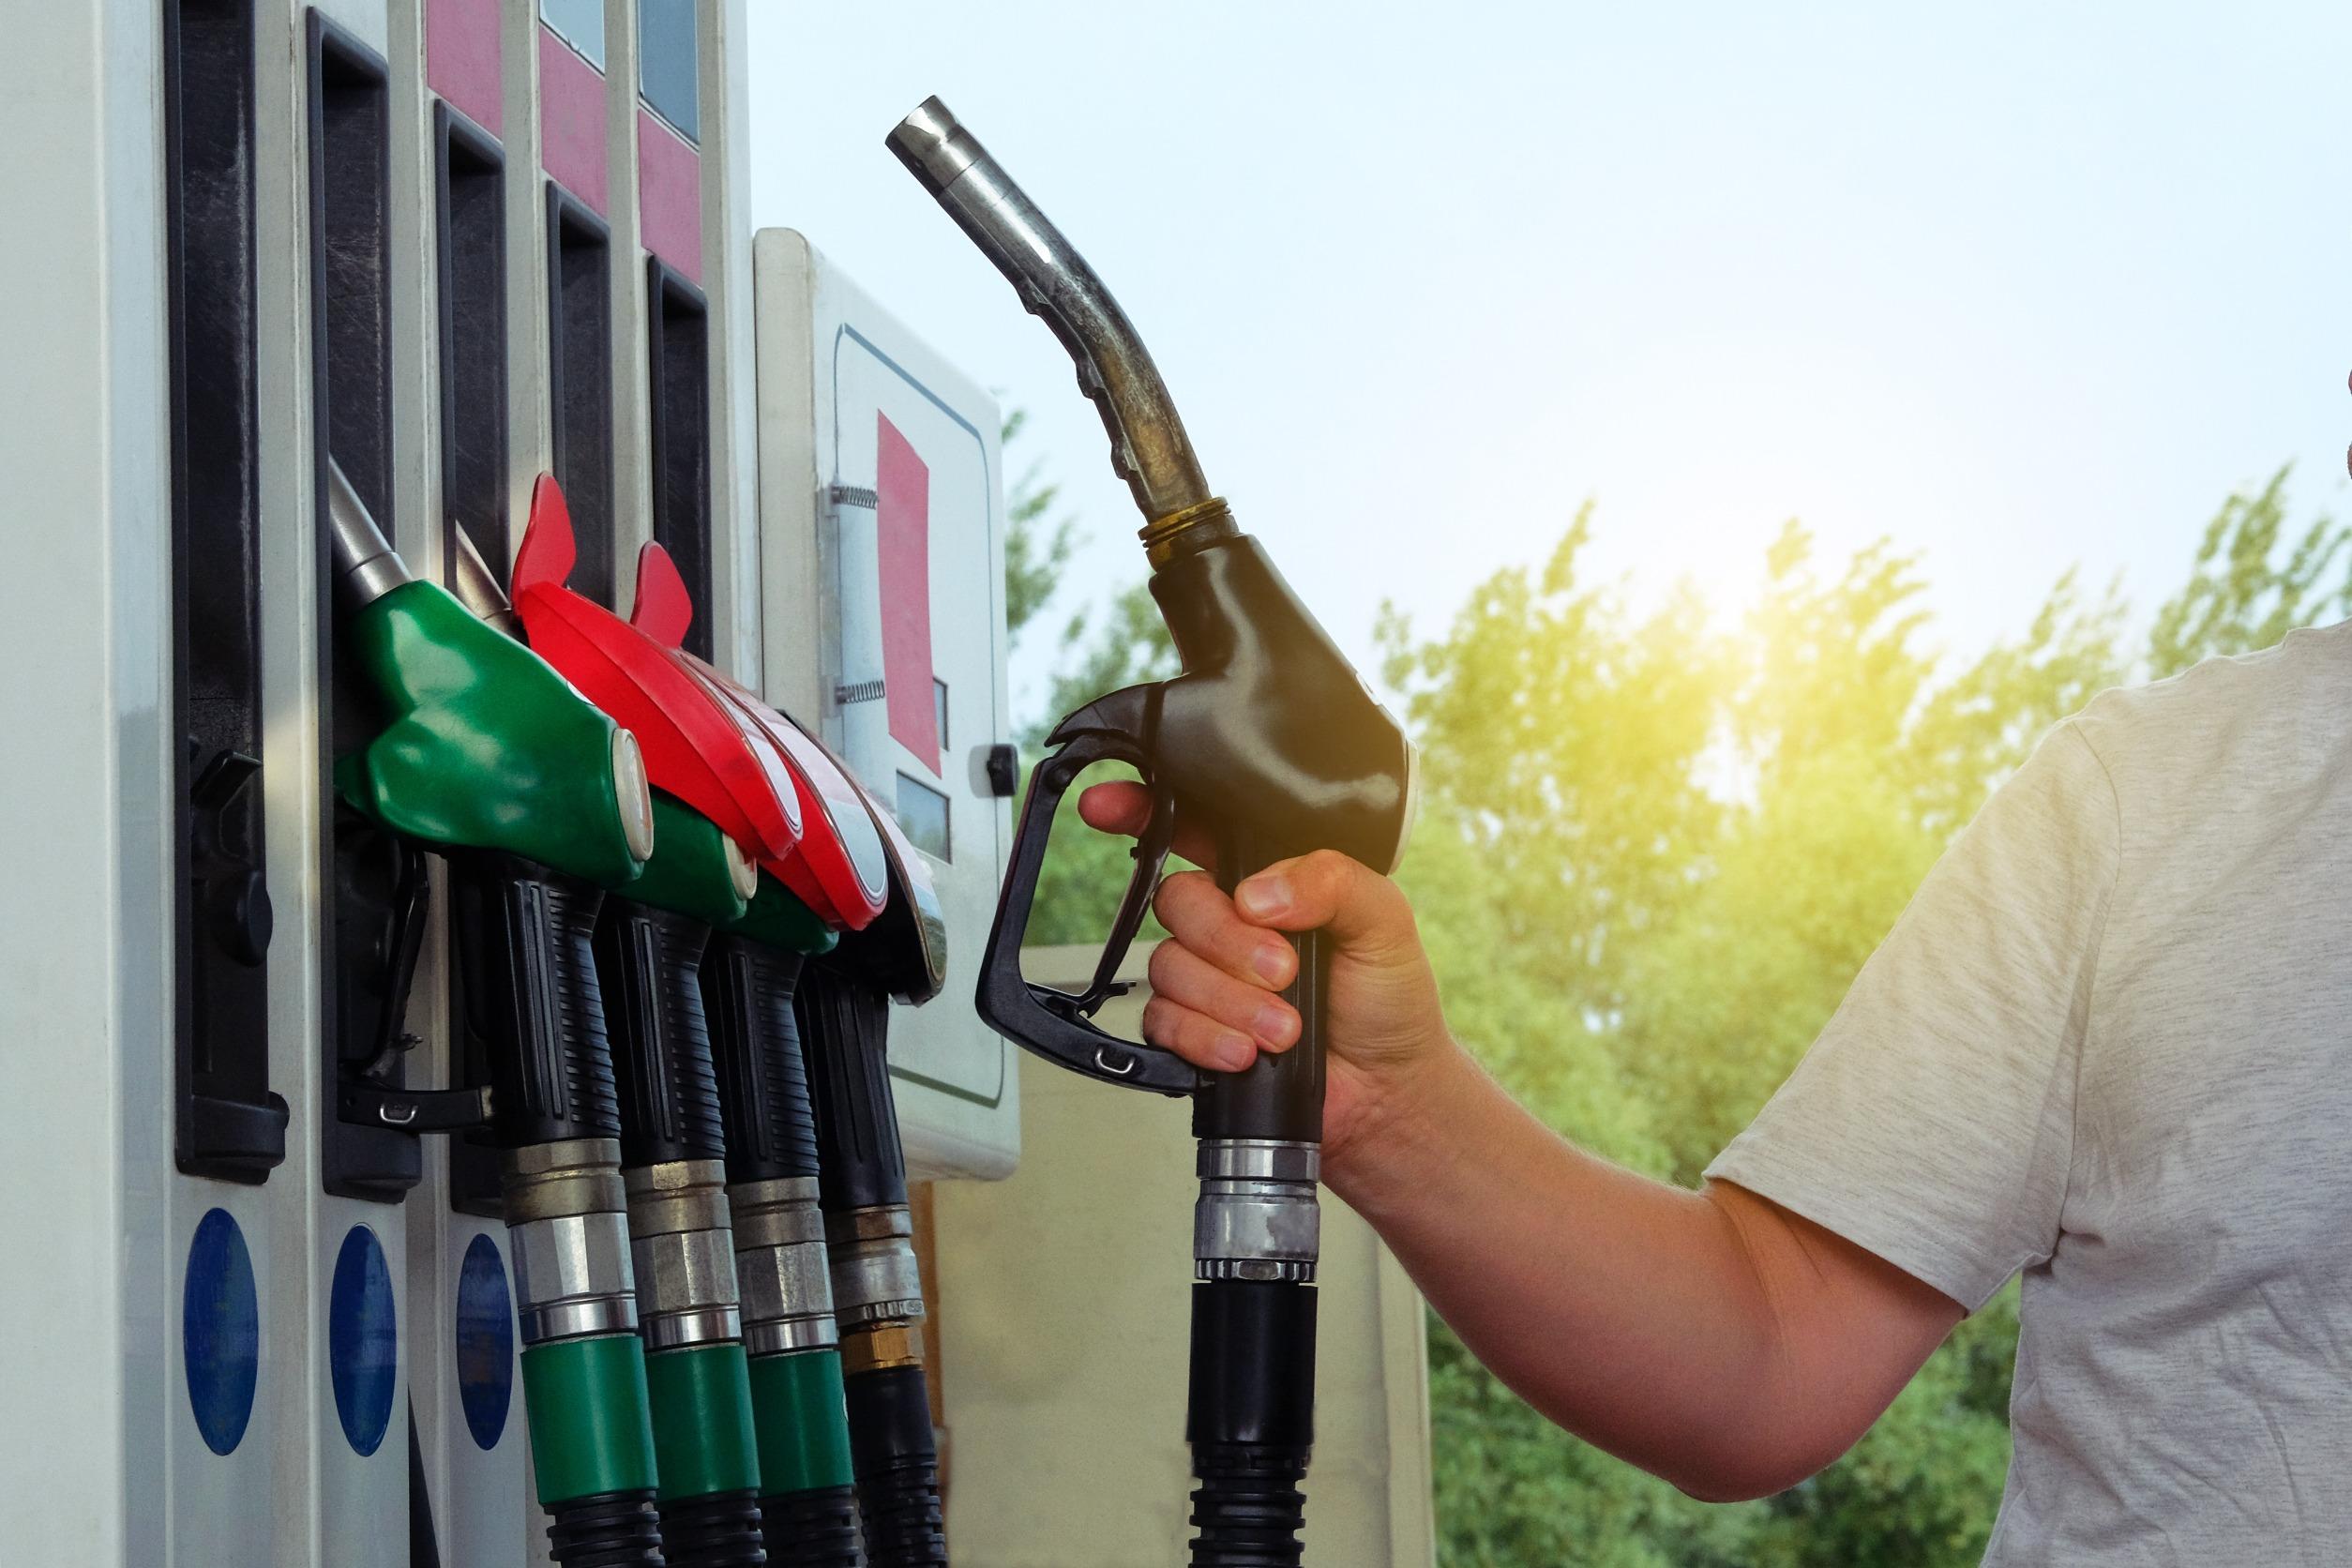 Prezzo medio della benzina: deleteria telenovela all’italiana